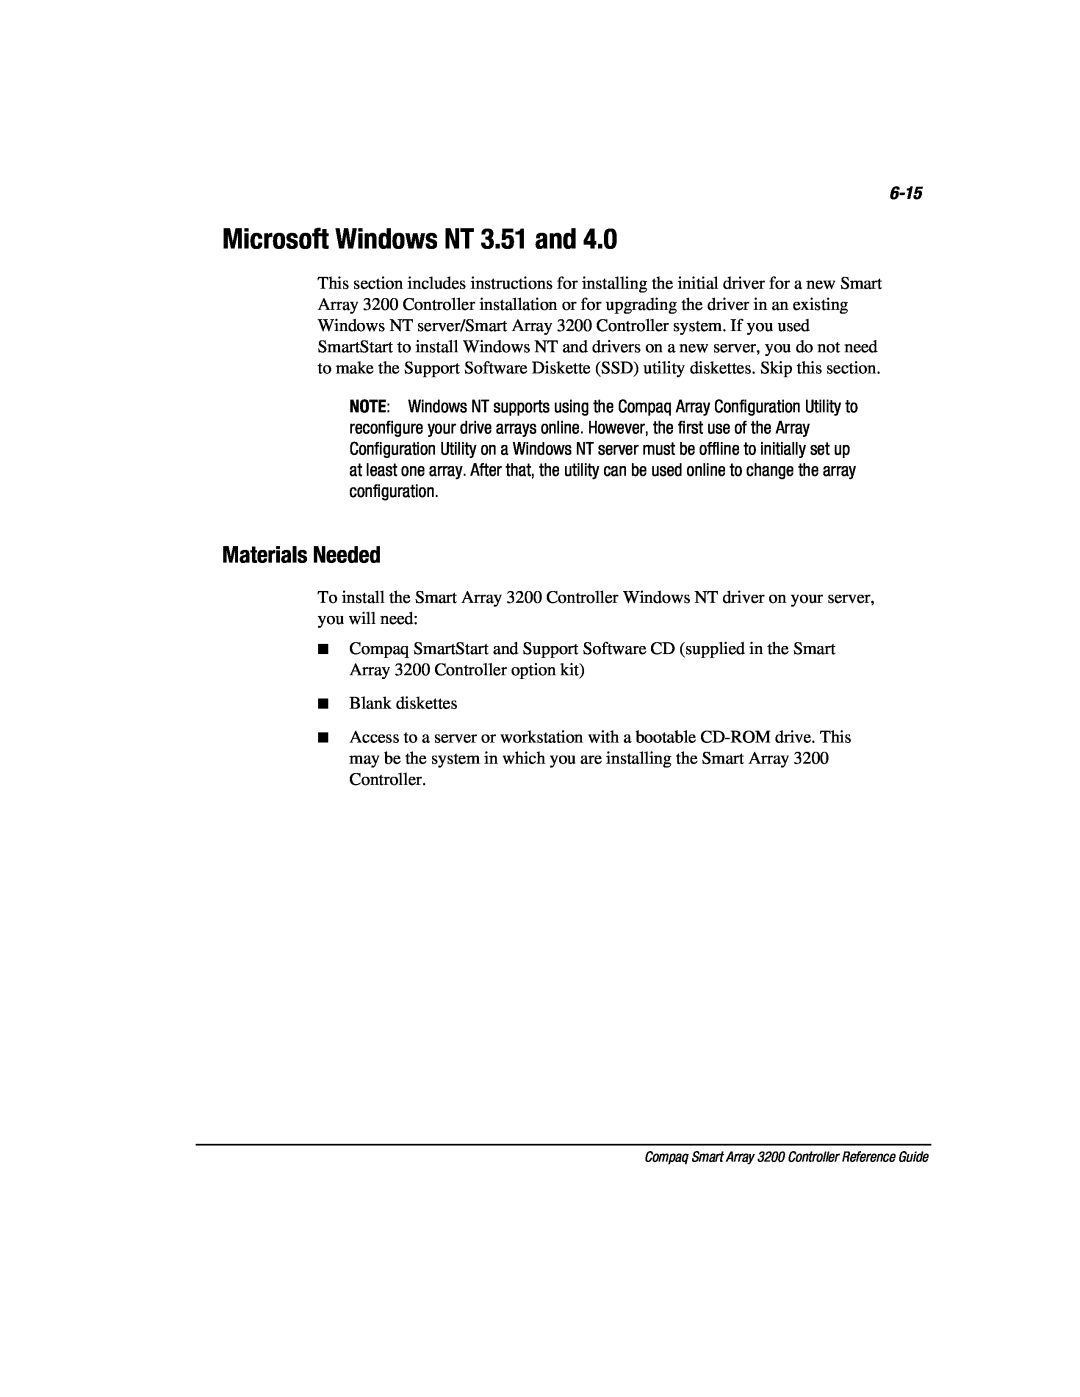 Compaq 3200 manual Microsoft Windows NT 3.51 and, 6-15, Materials Needed 